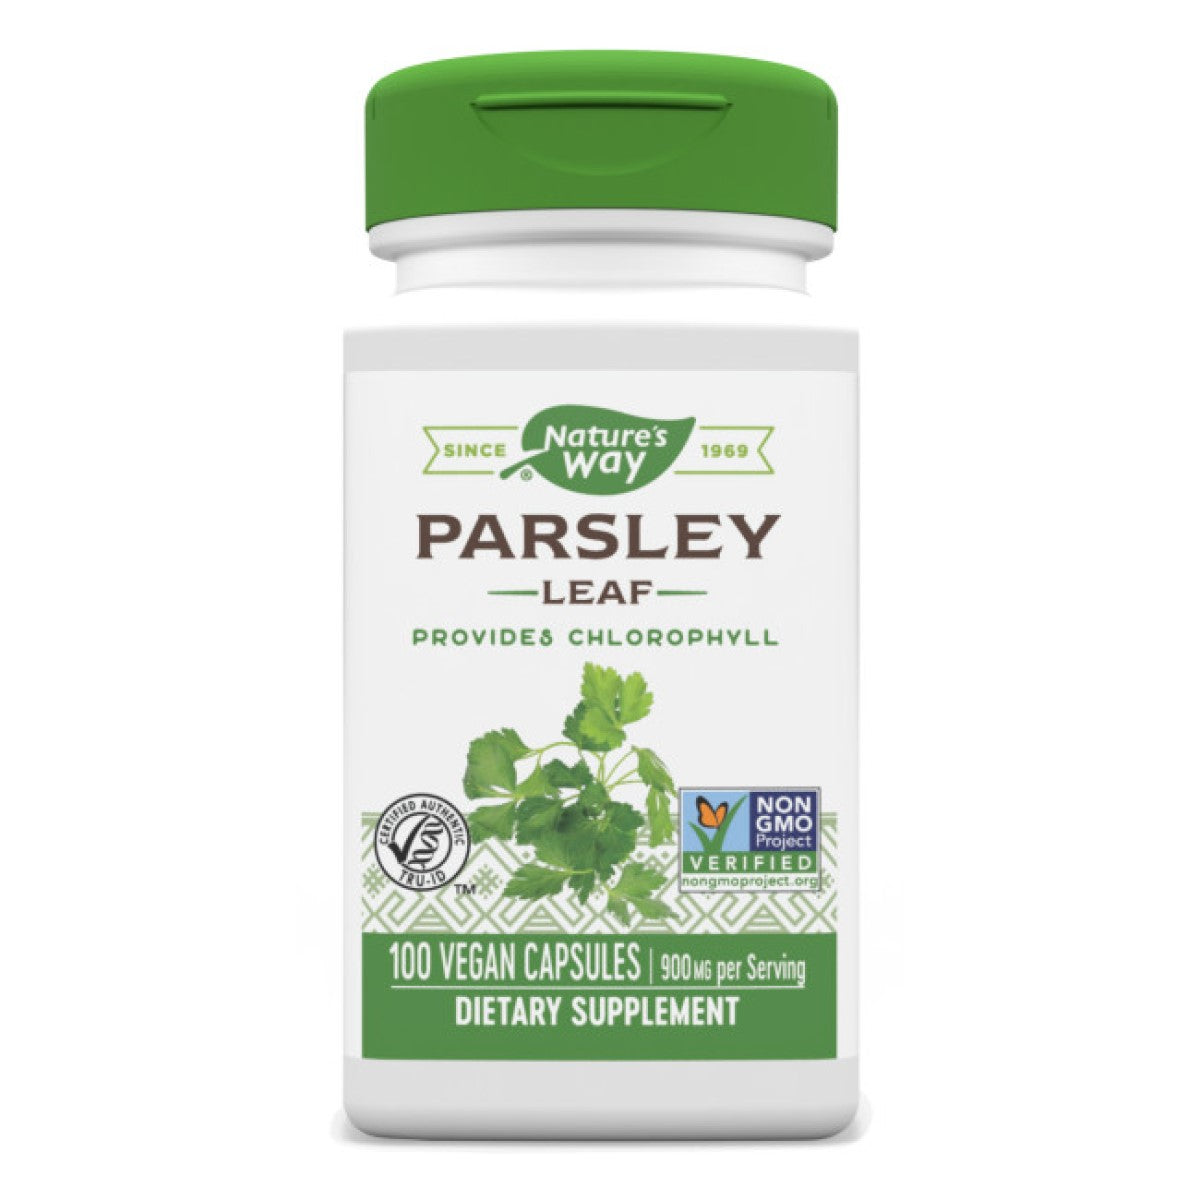 Primary image of Parsley Herb